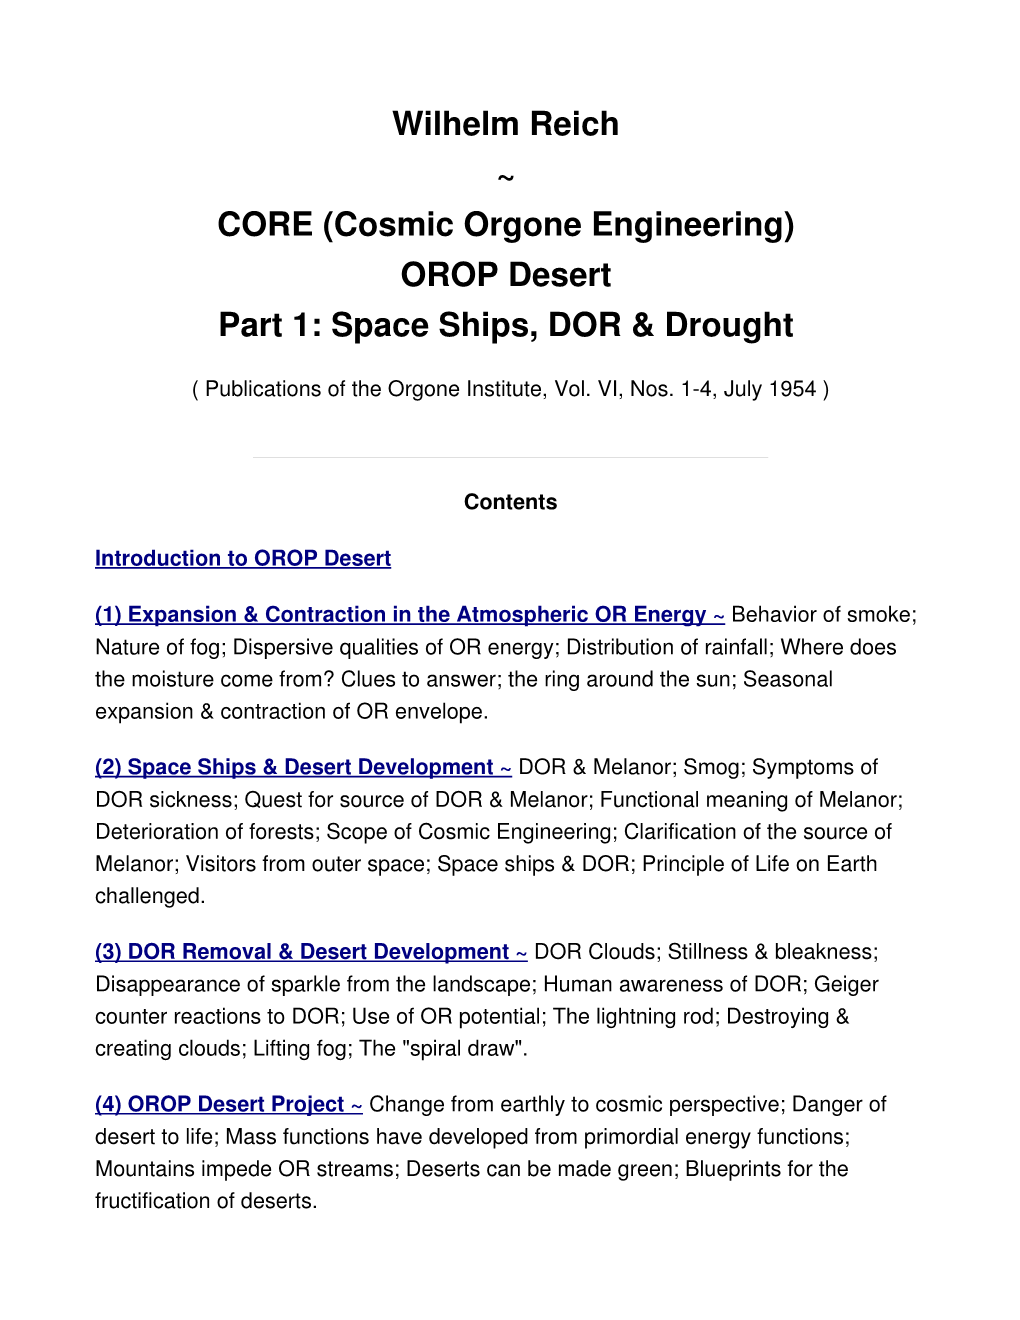 Wilhelm Reich ~ CORE (Cosmic Orgone Engineering) OROP Desert Part 1: Space Ships, DOR & Drought